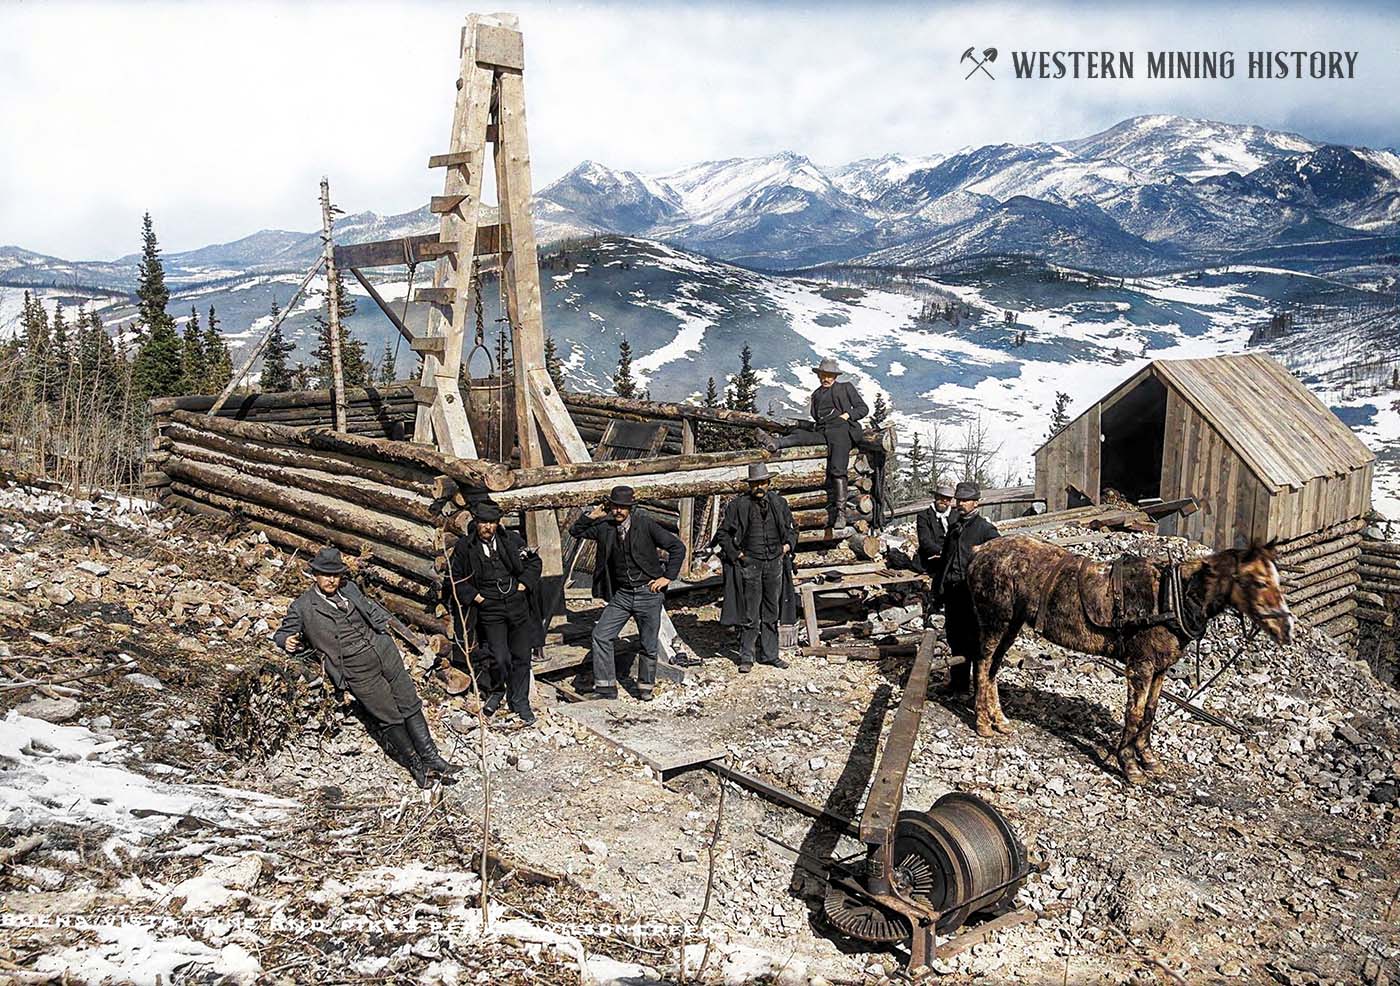 Buena Vista Mine at Altman ca. 1893 (colorized)